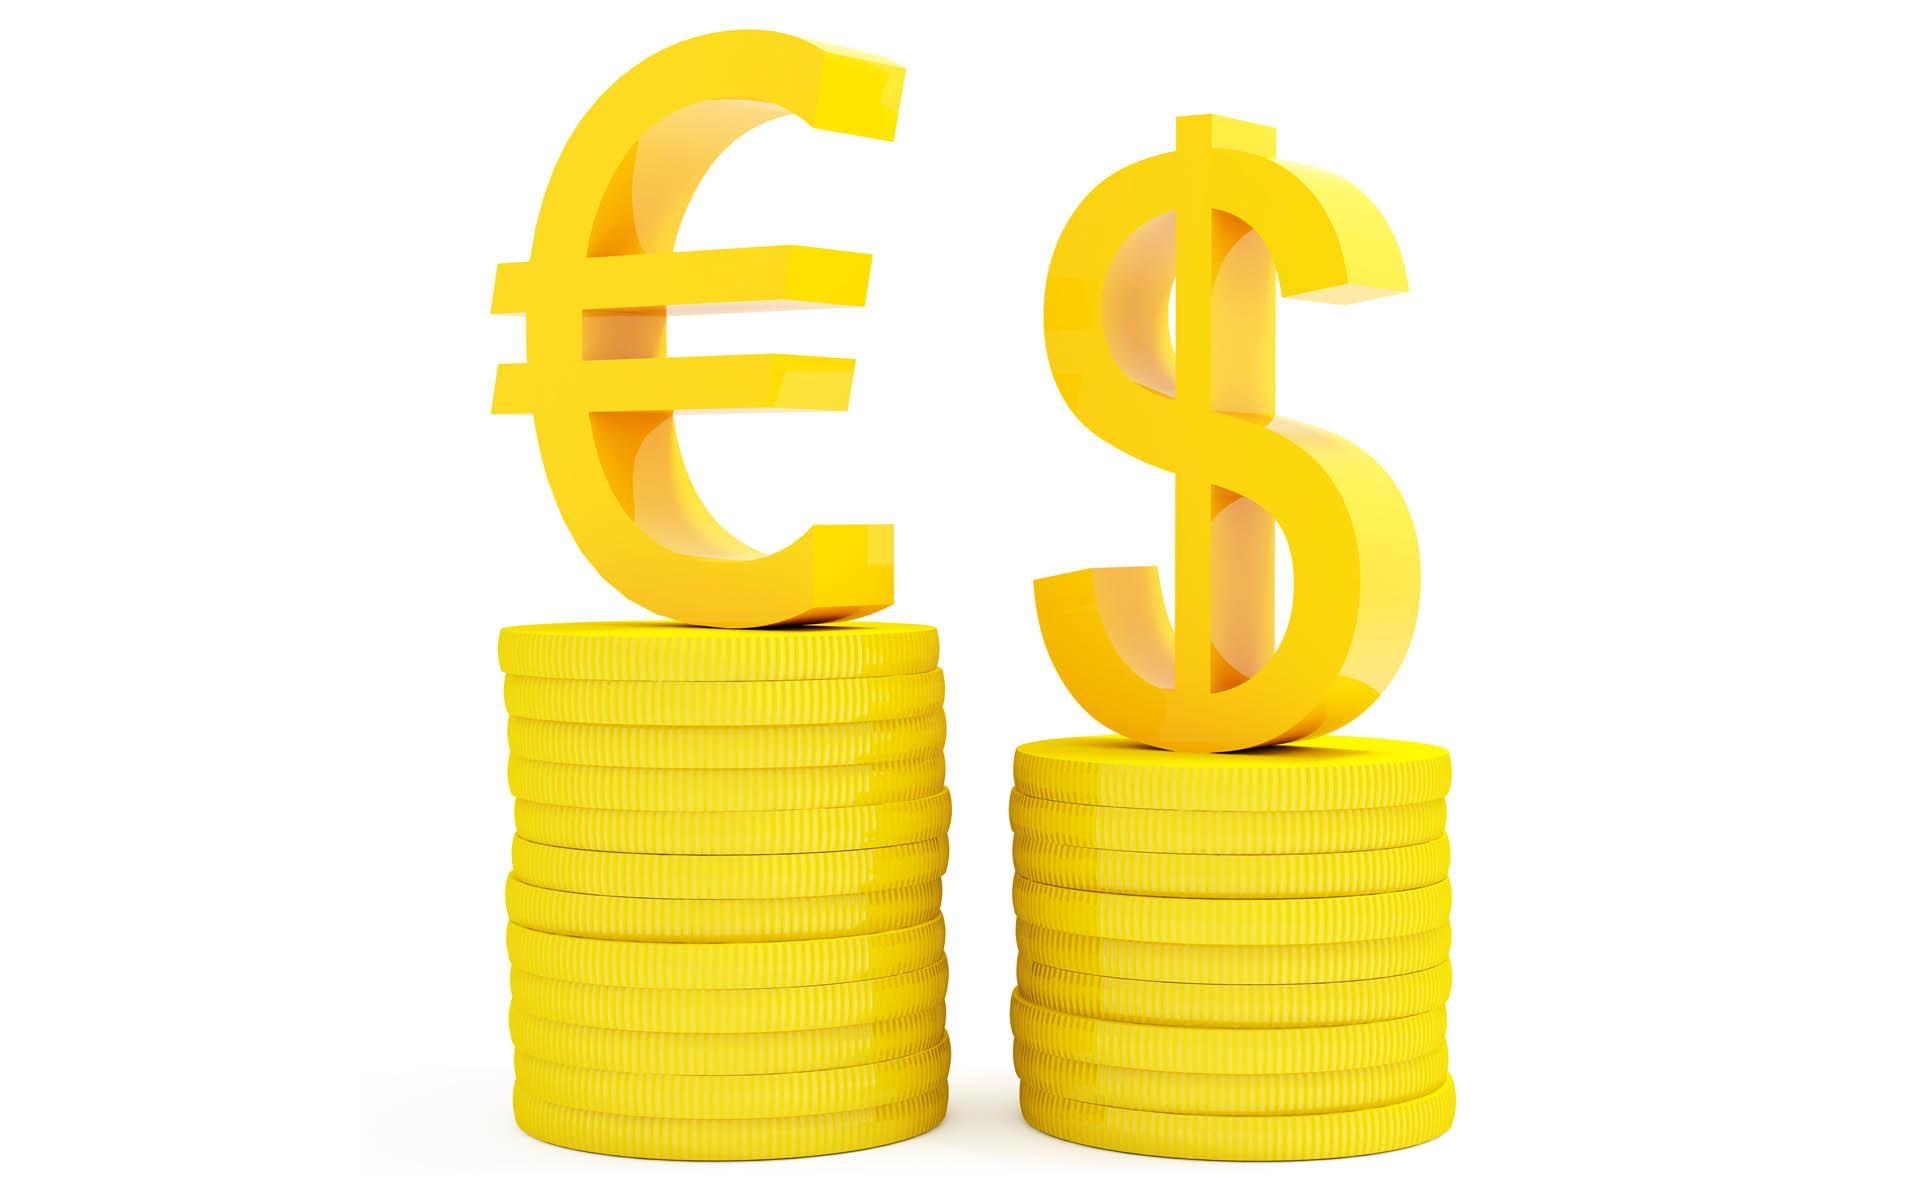  маленькая разница в цене пары валют евро-доллар